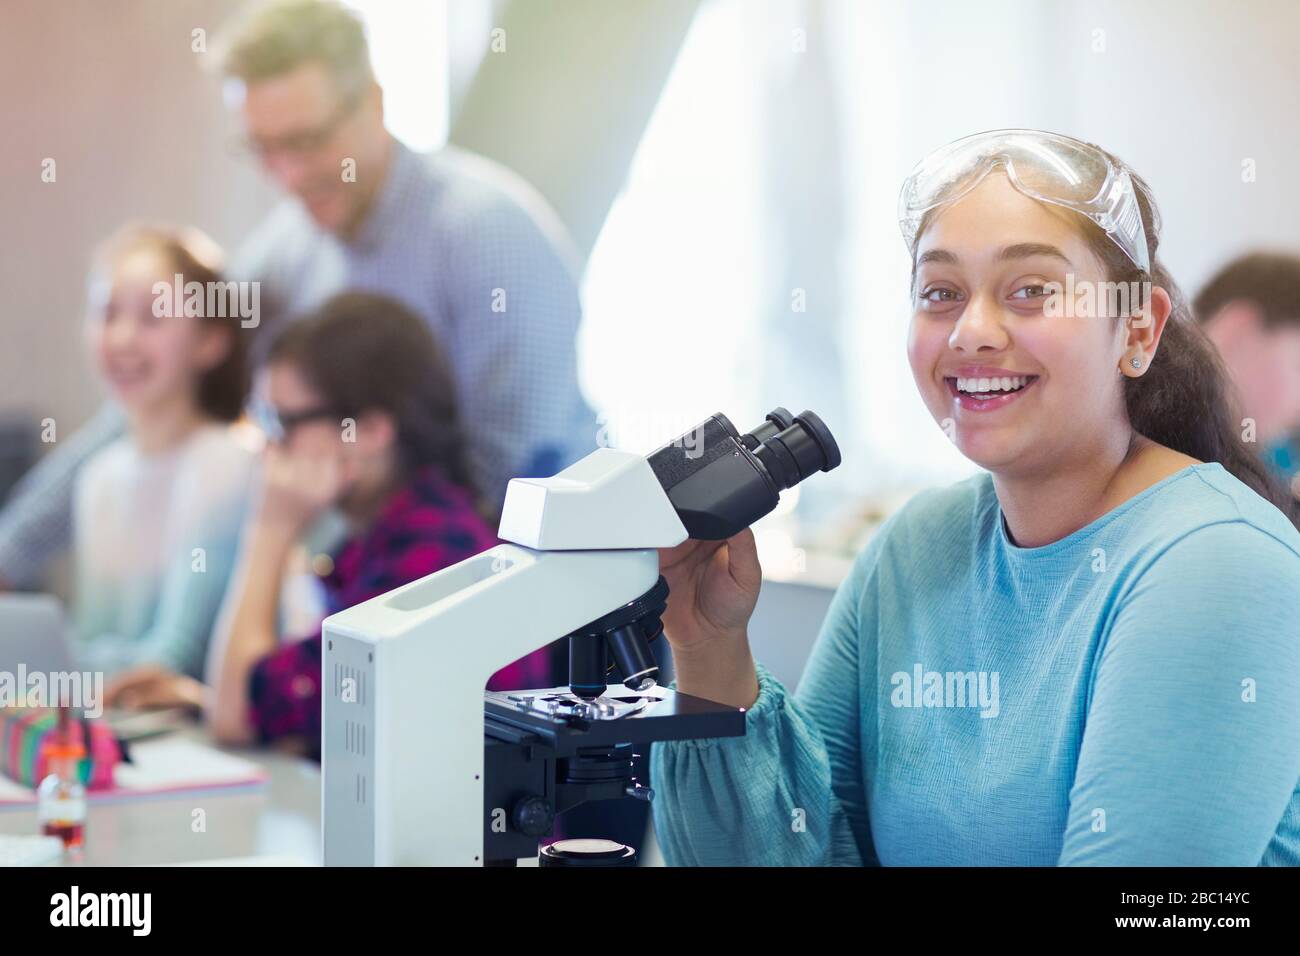 Portrait smiling, confident girl student conducting scientific experiment at microscope in laboratory classroom Stock Photo